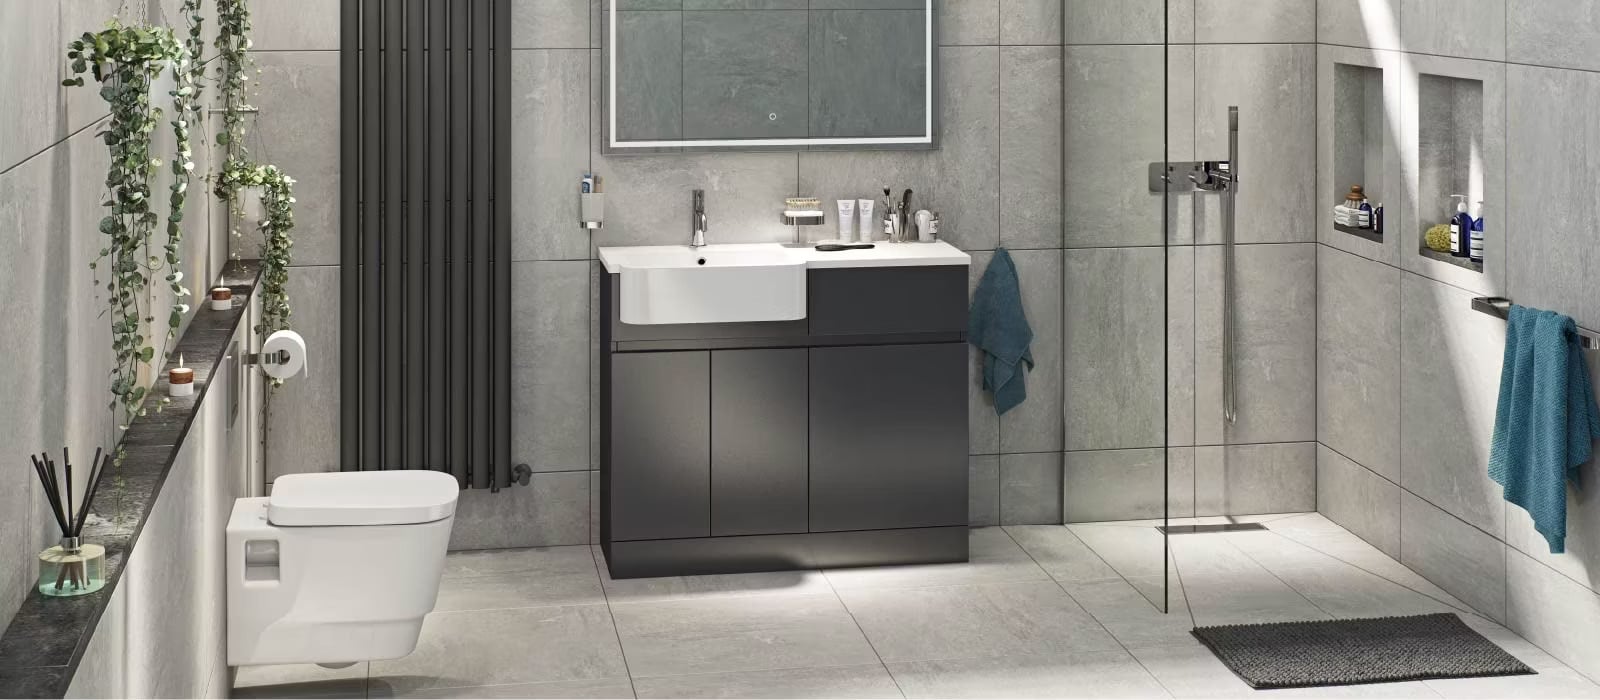 Gatineau/Ottawa Bathroom renovation services with Glass shower enclosure idea